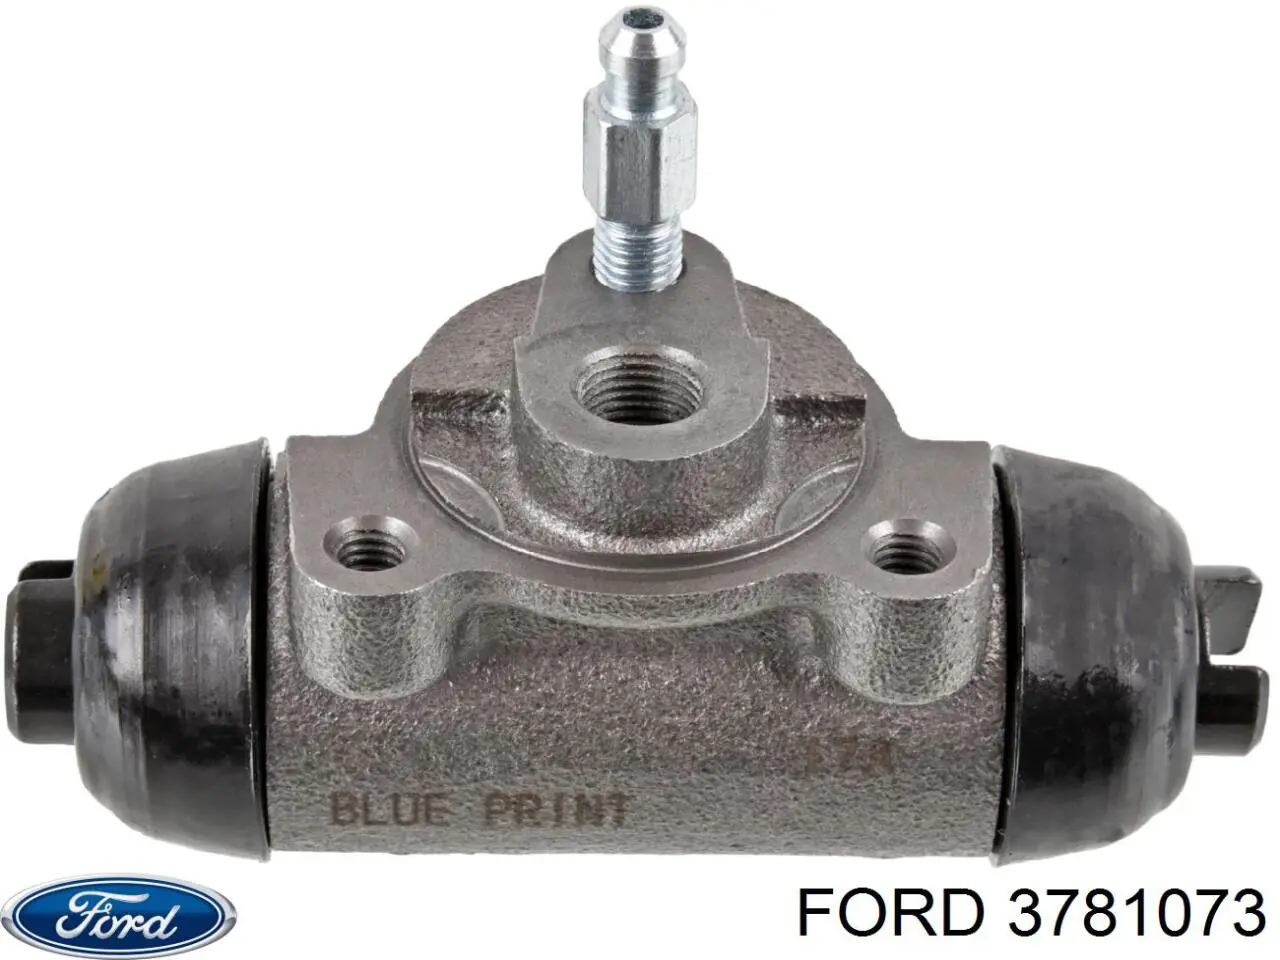 3781073 Ford цилиндр тормозной колесный рабочий задний